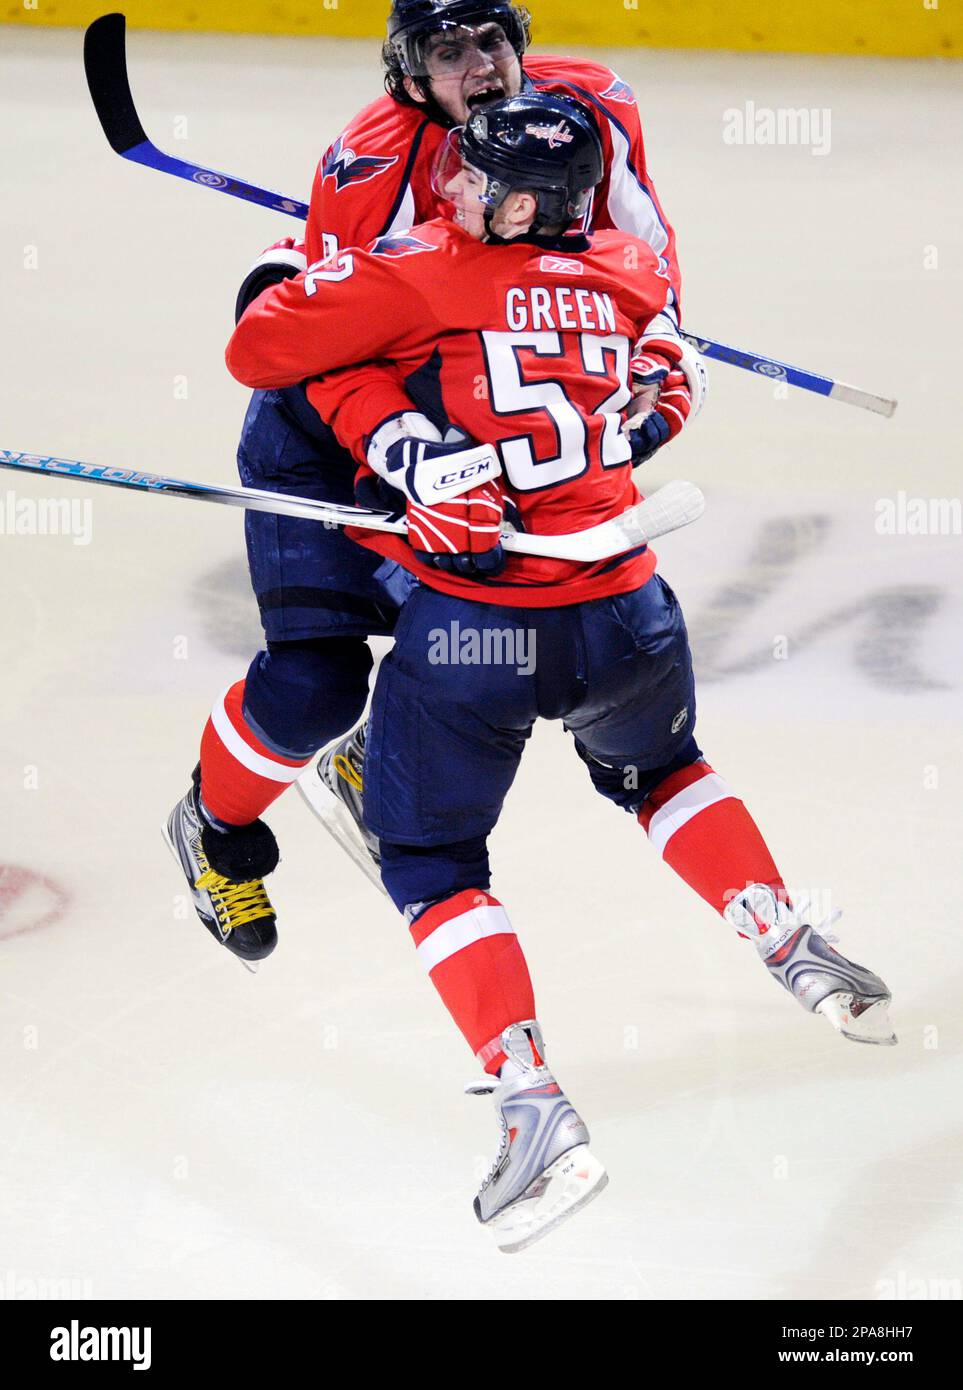 Mike Green Washington Capitals Editorial Photo - Image of hockey